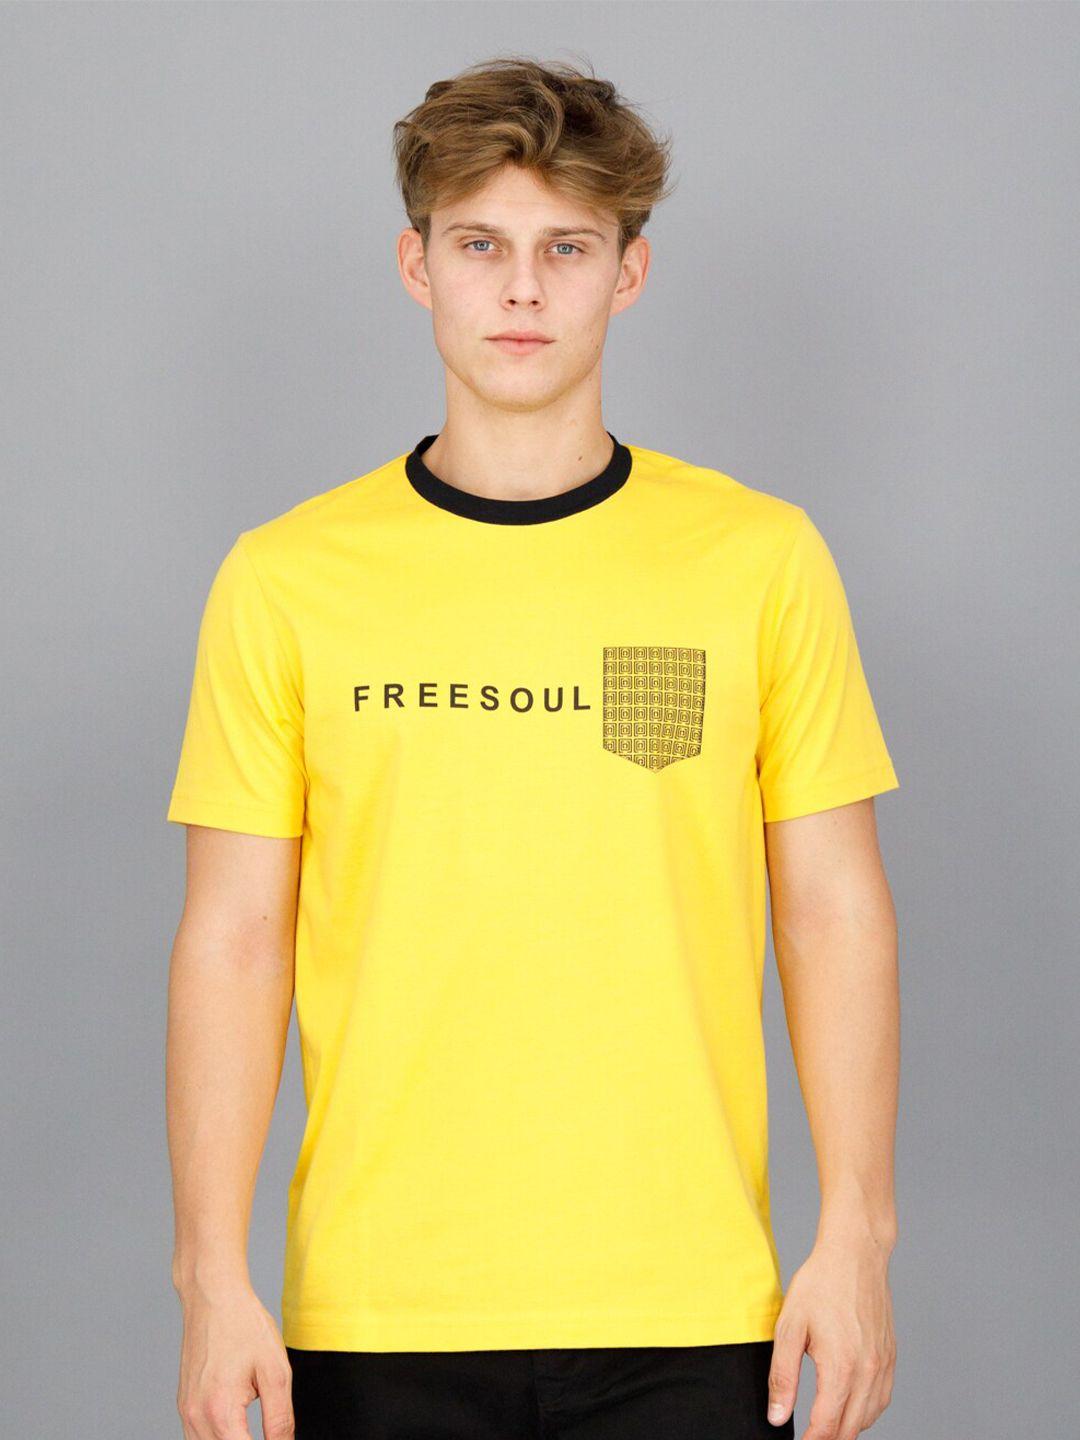 freesoul men yellow typography printed cotton t-shirt